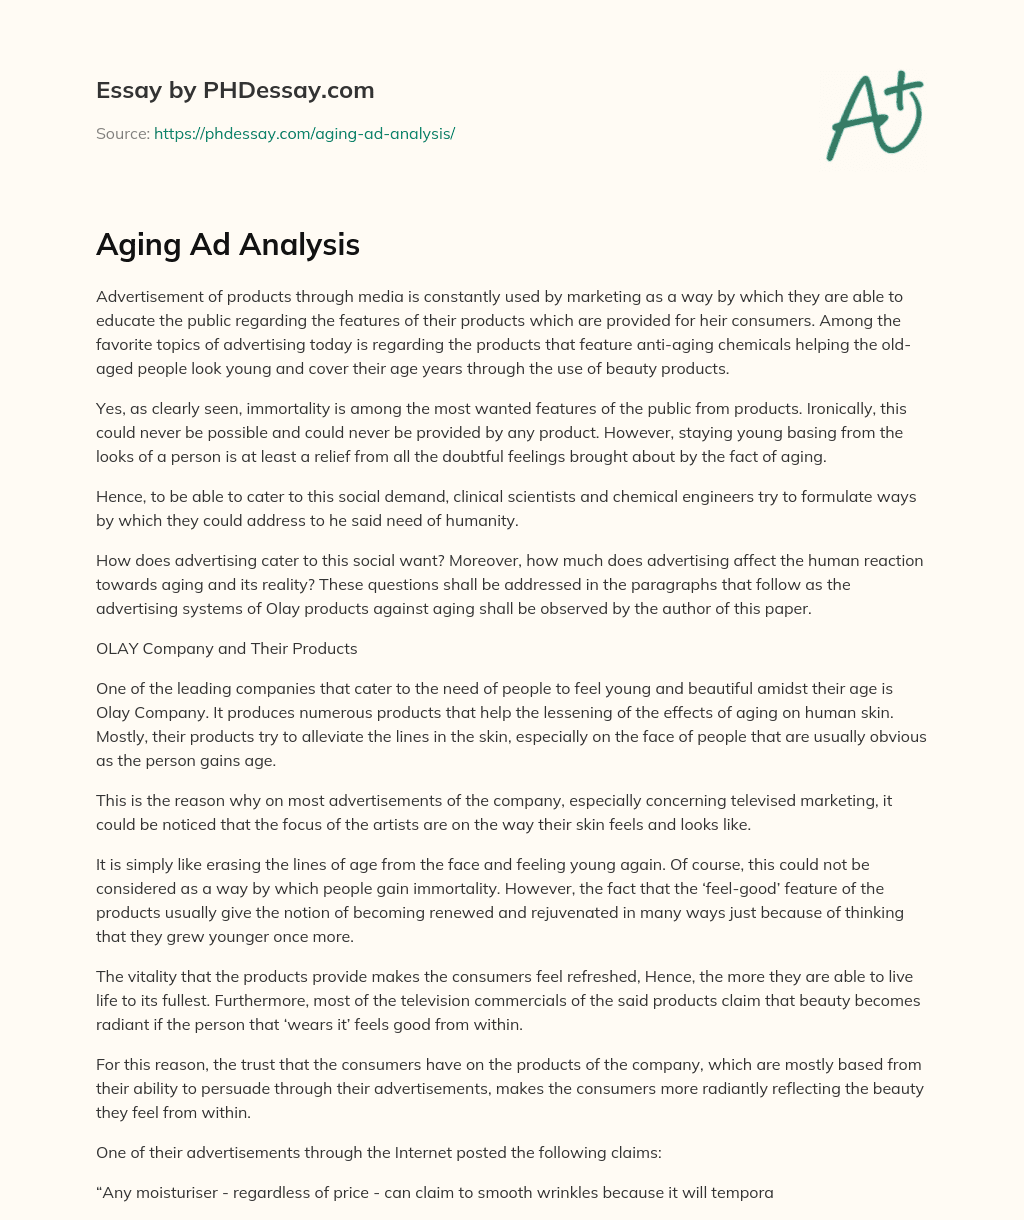 Aging Ad Analysis essay